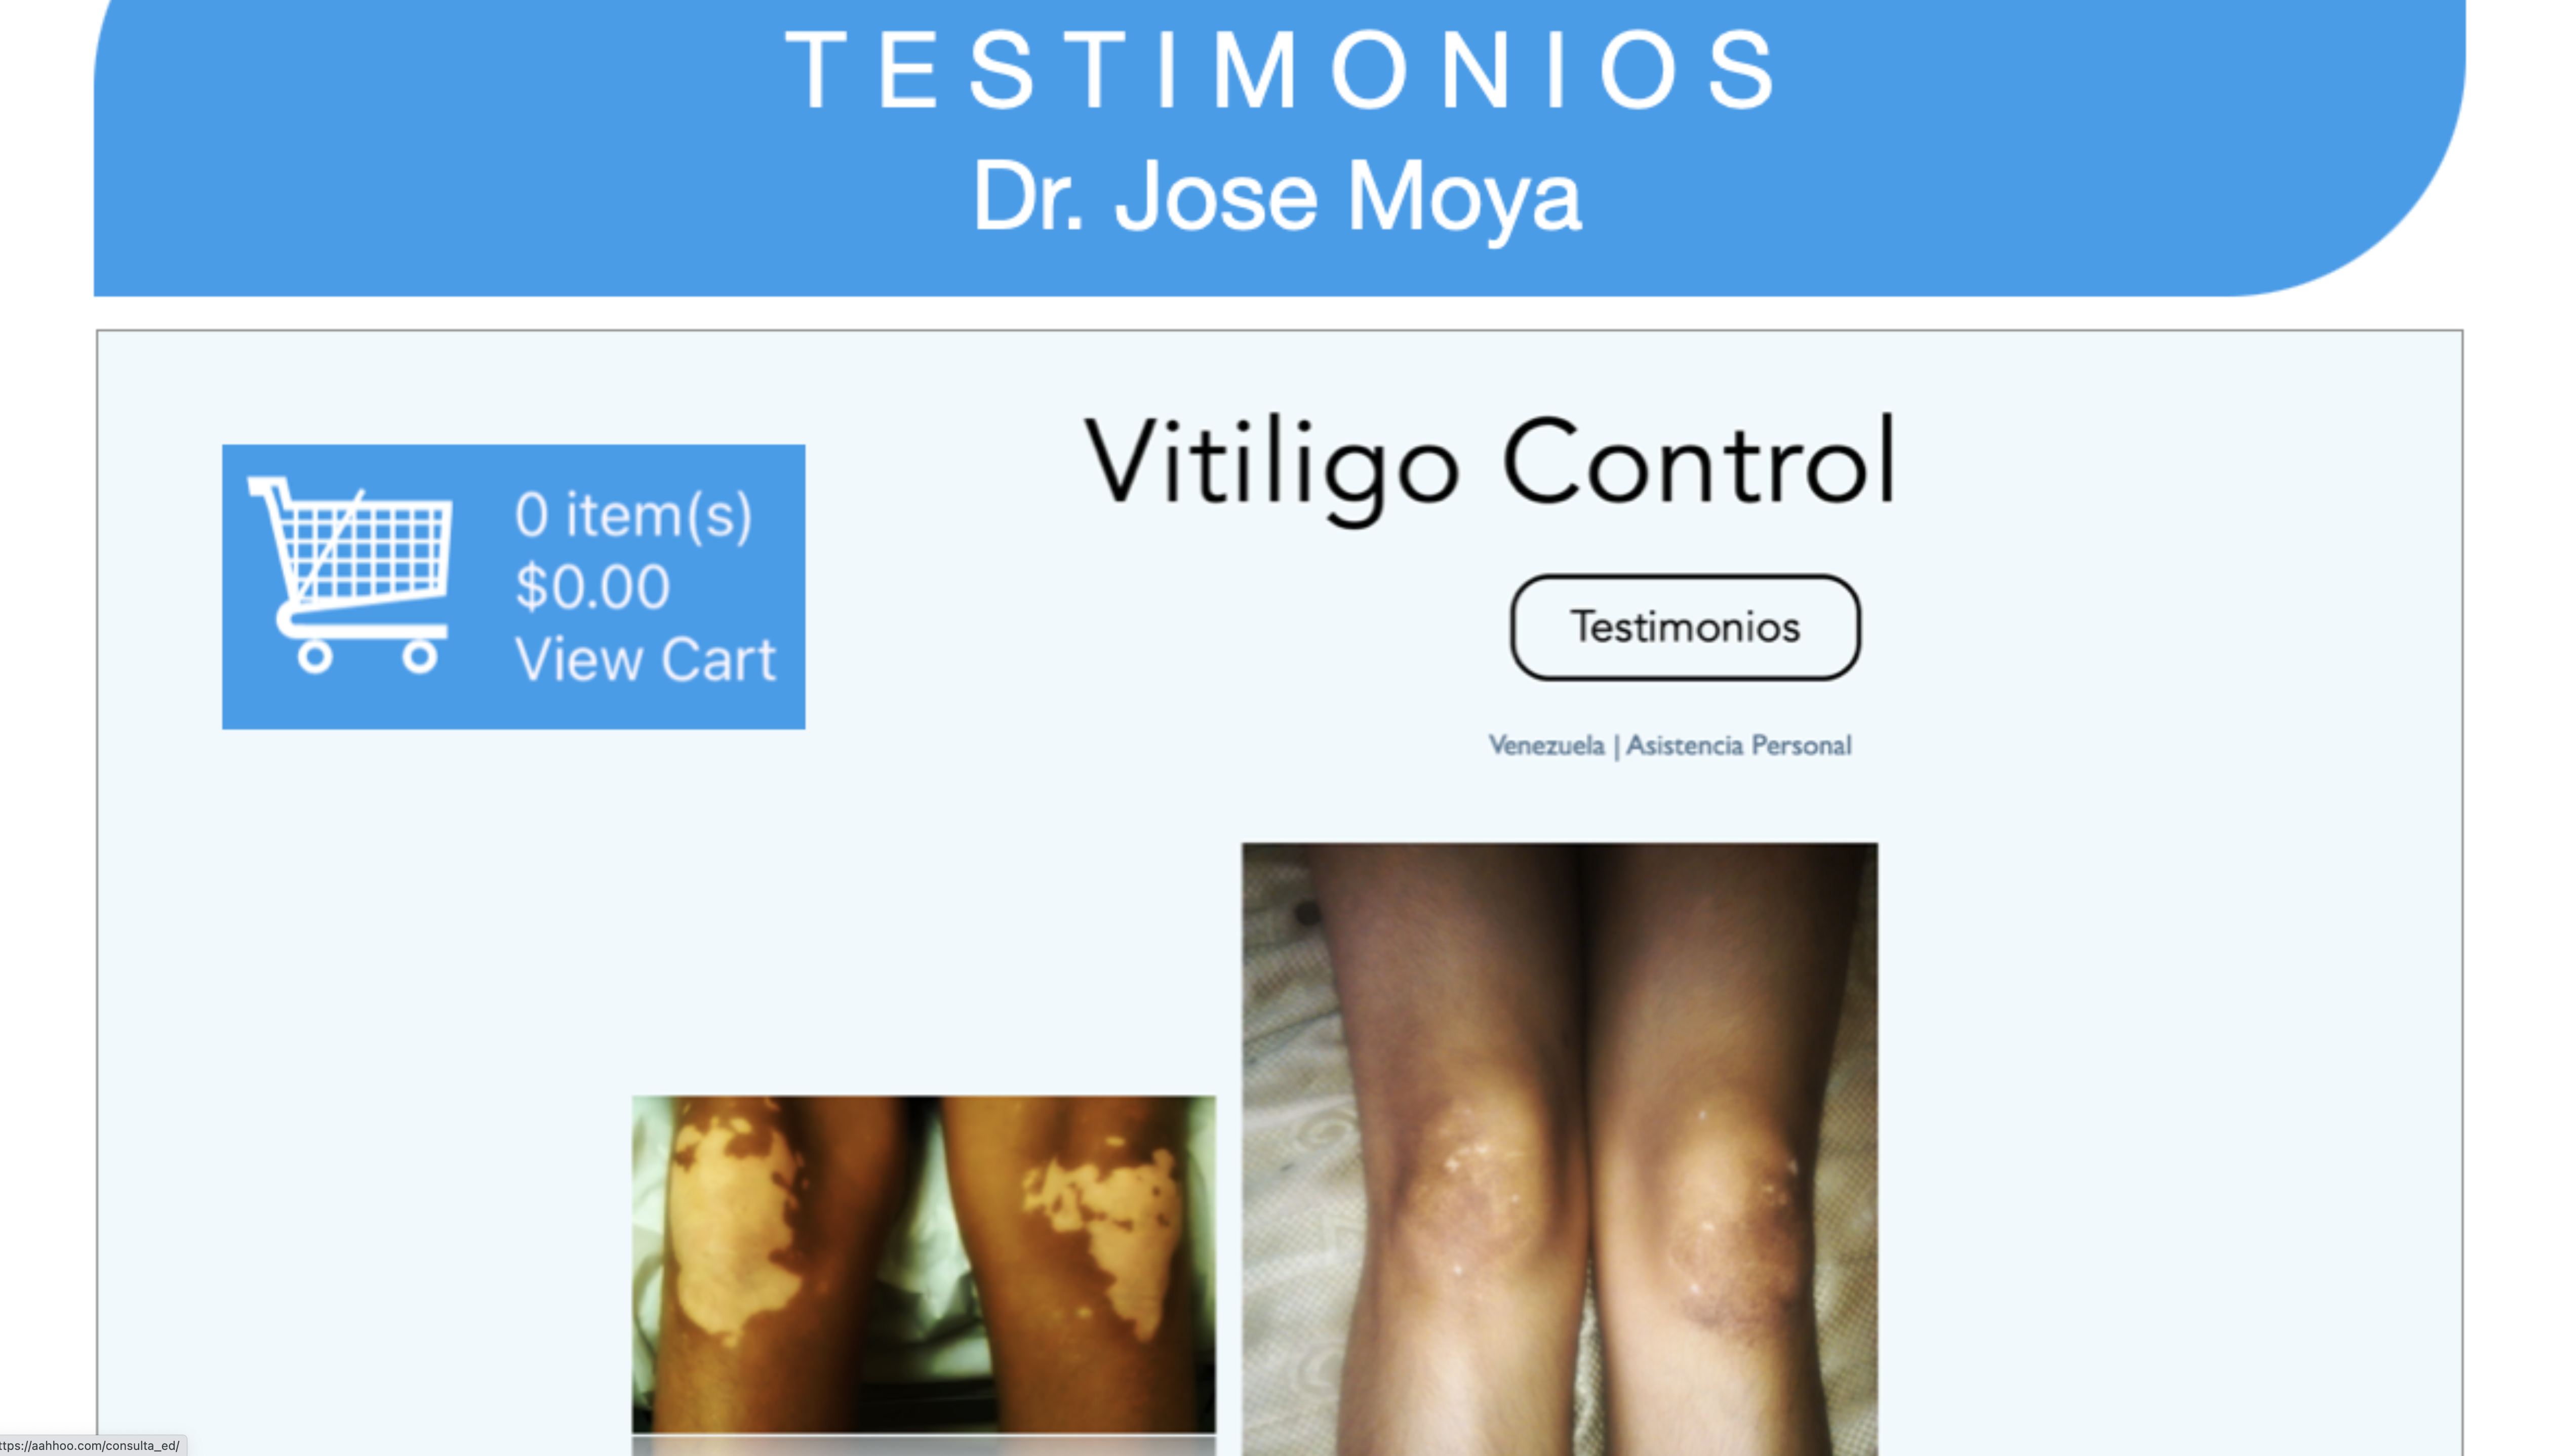 testimonios_libro_evitando_y_controlando_vitiligo_6.png